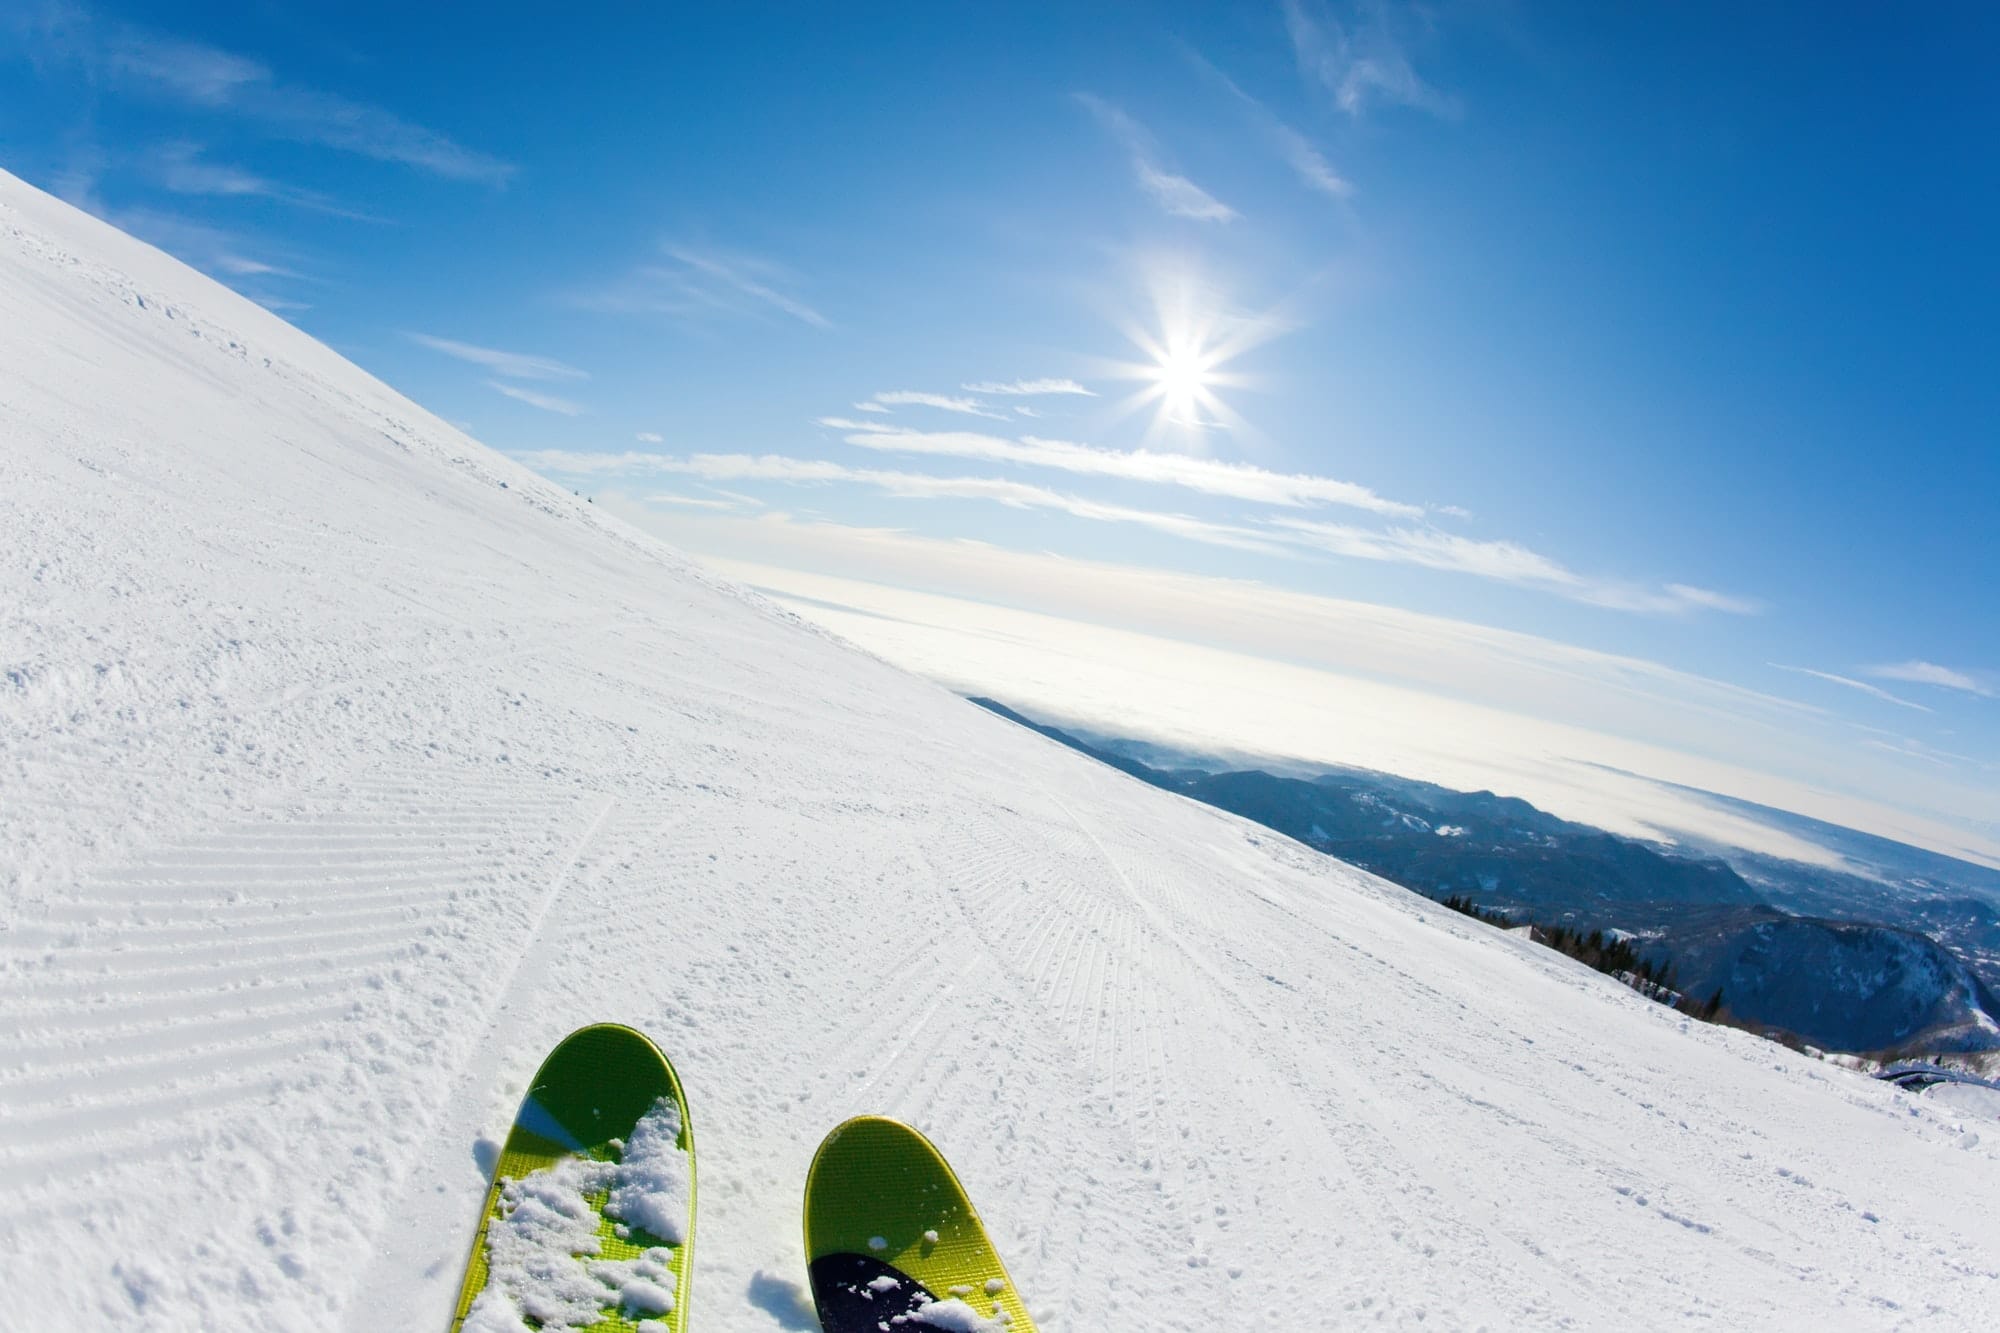 Skiing on a ski slope